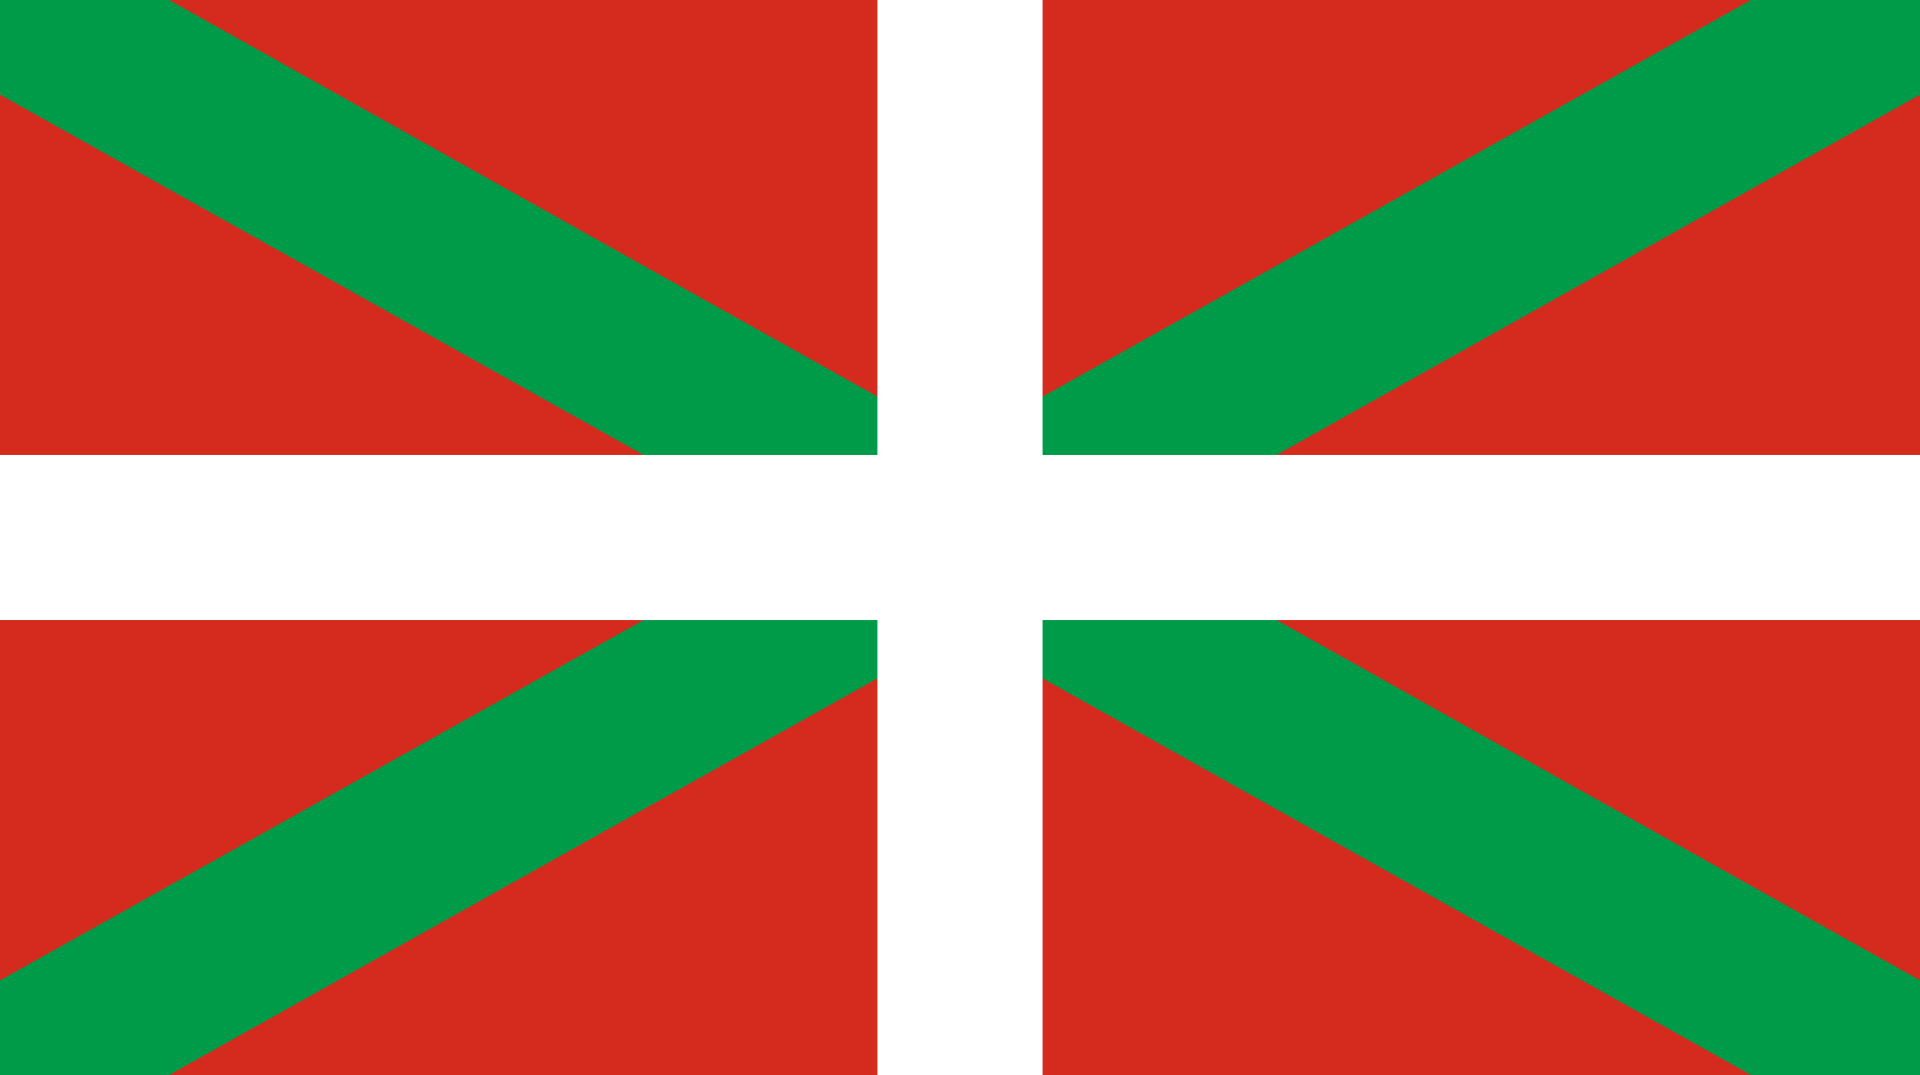 Vlag Baskenland